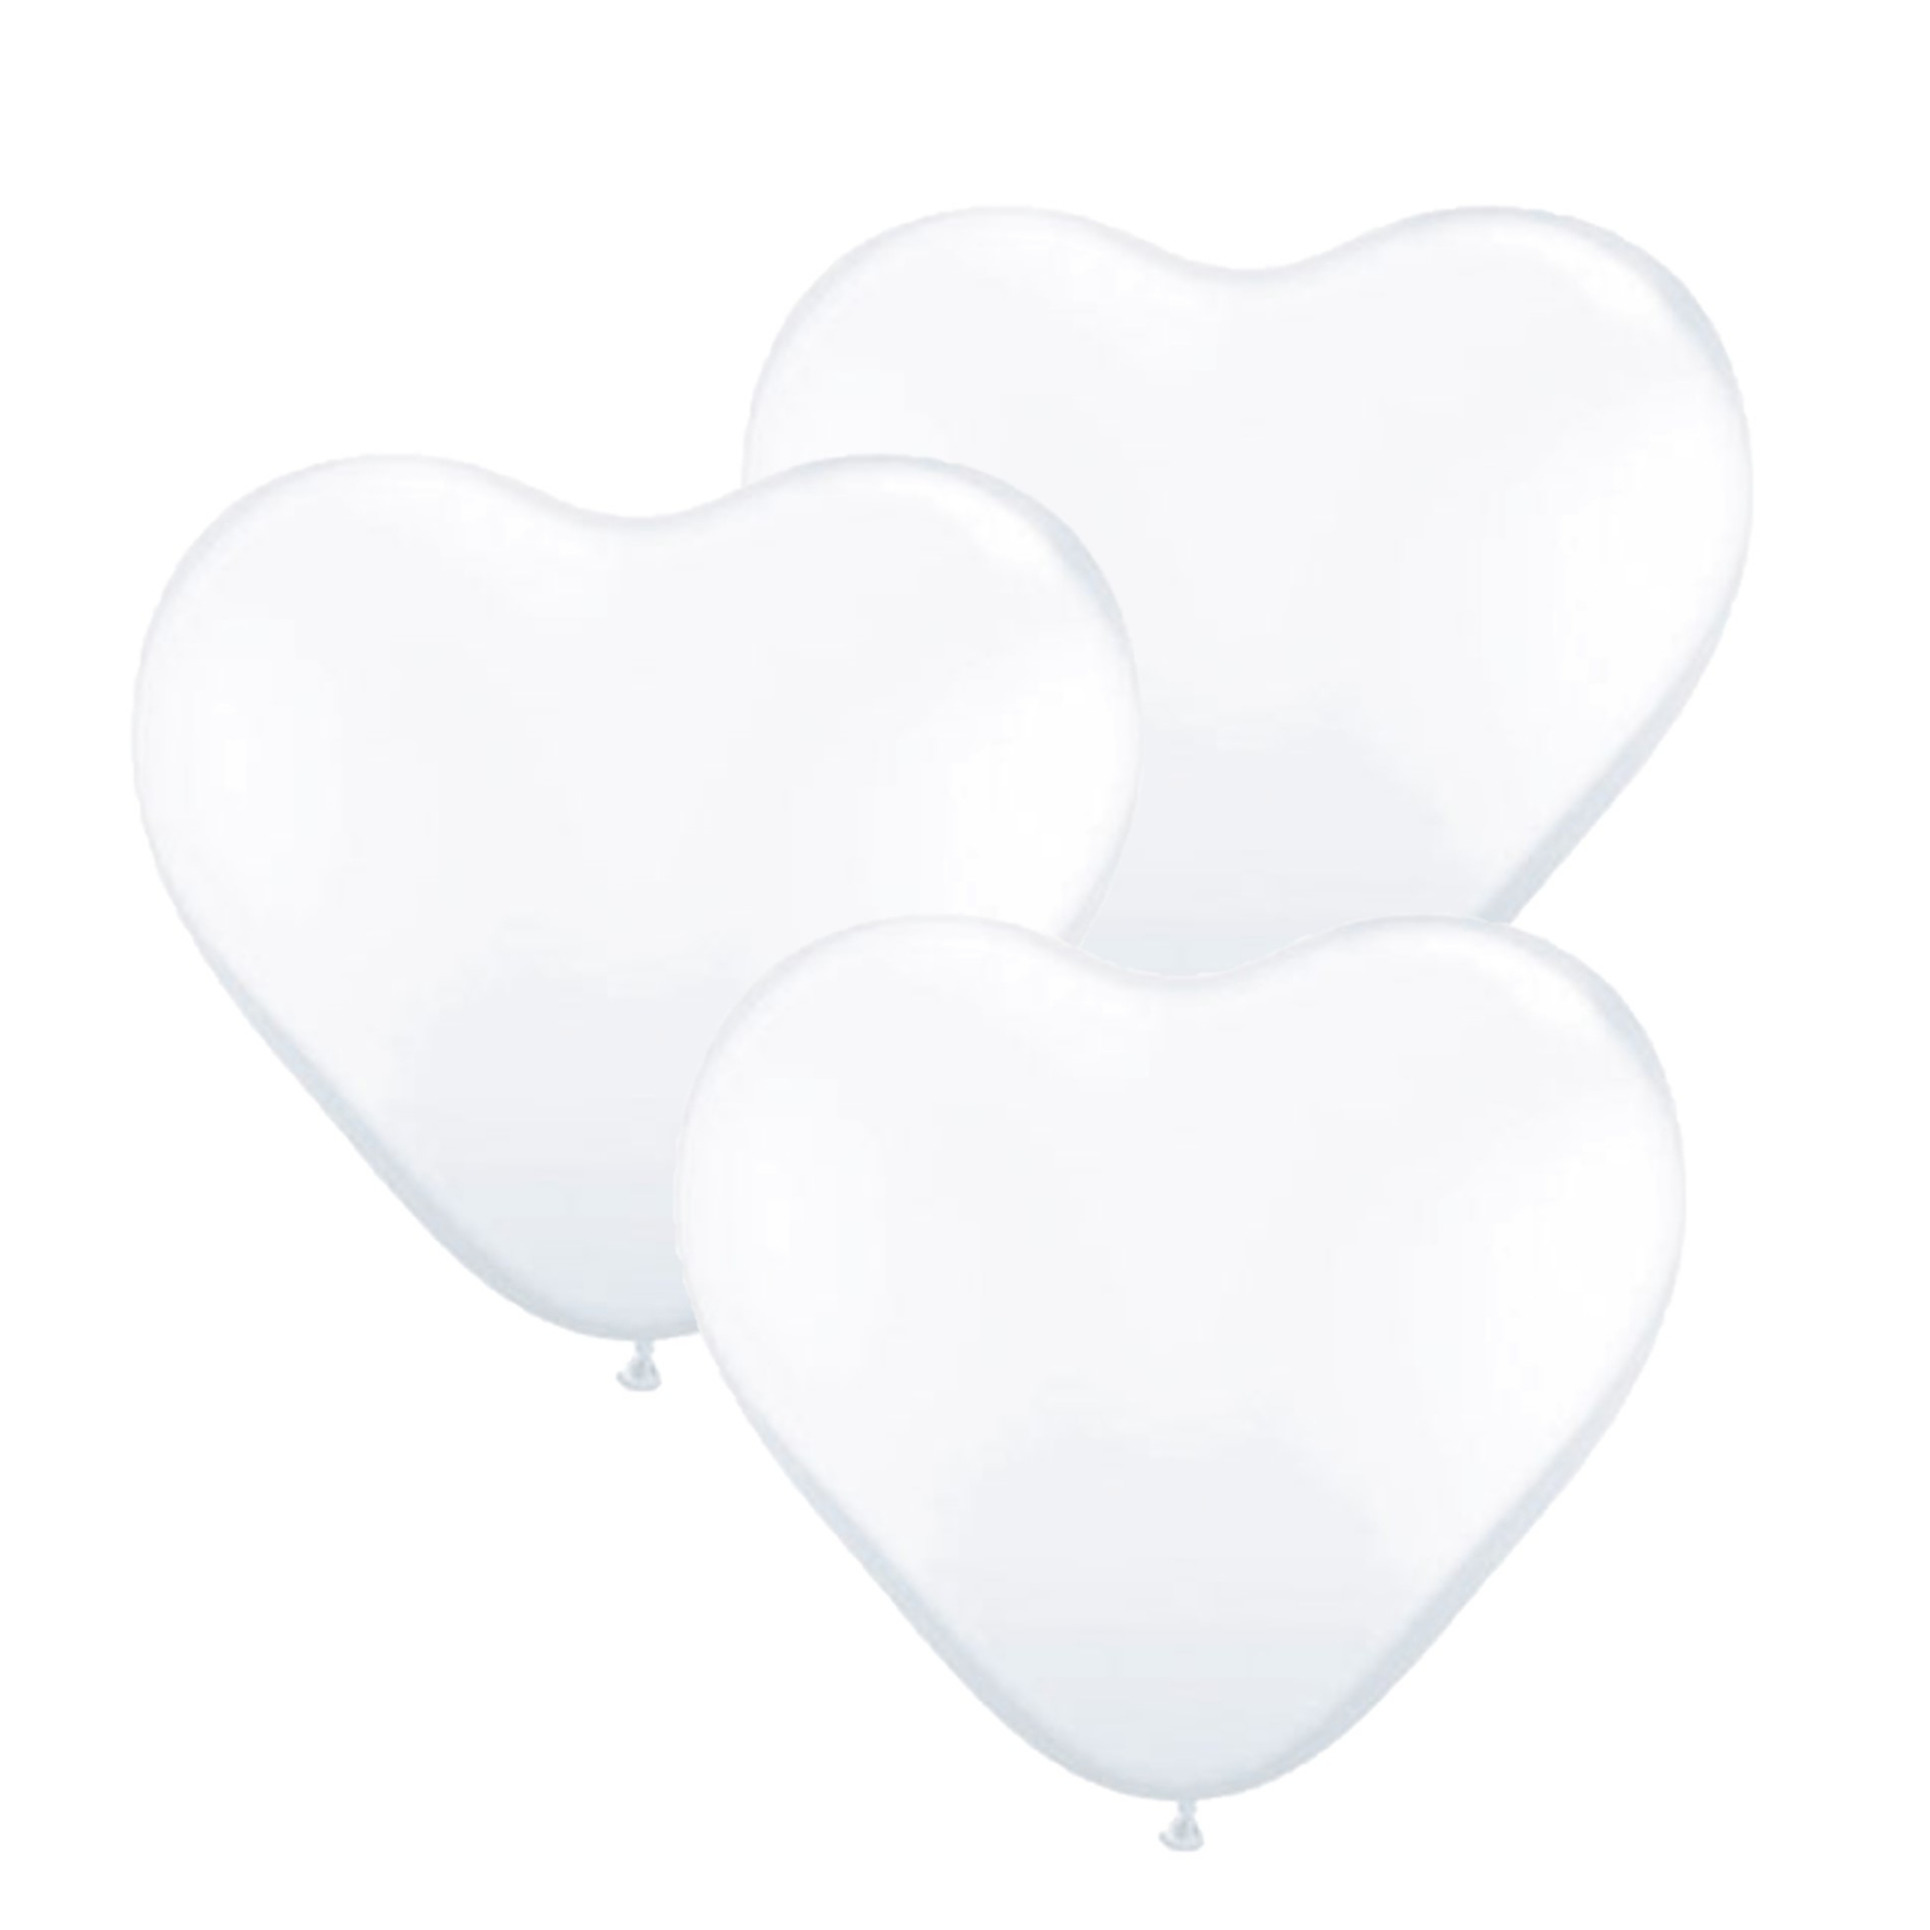 Pakket van 3x stuks qualatex hartjes XL ballonnen wit 90 cm